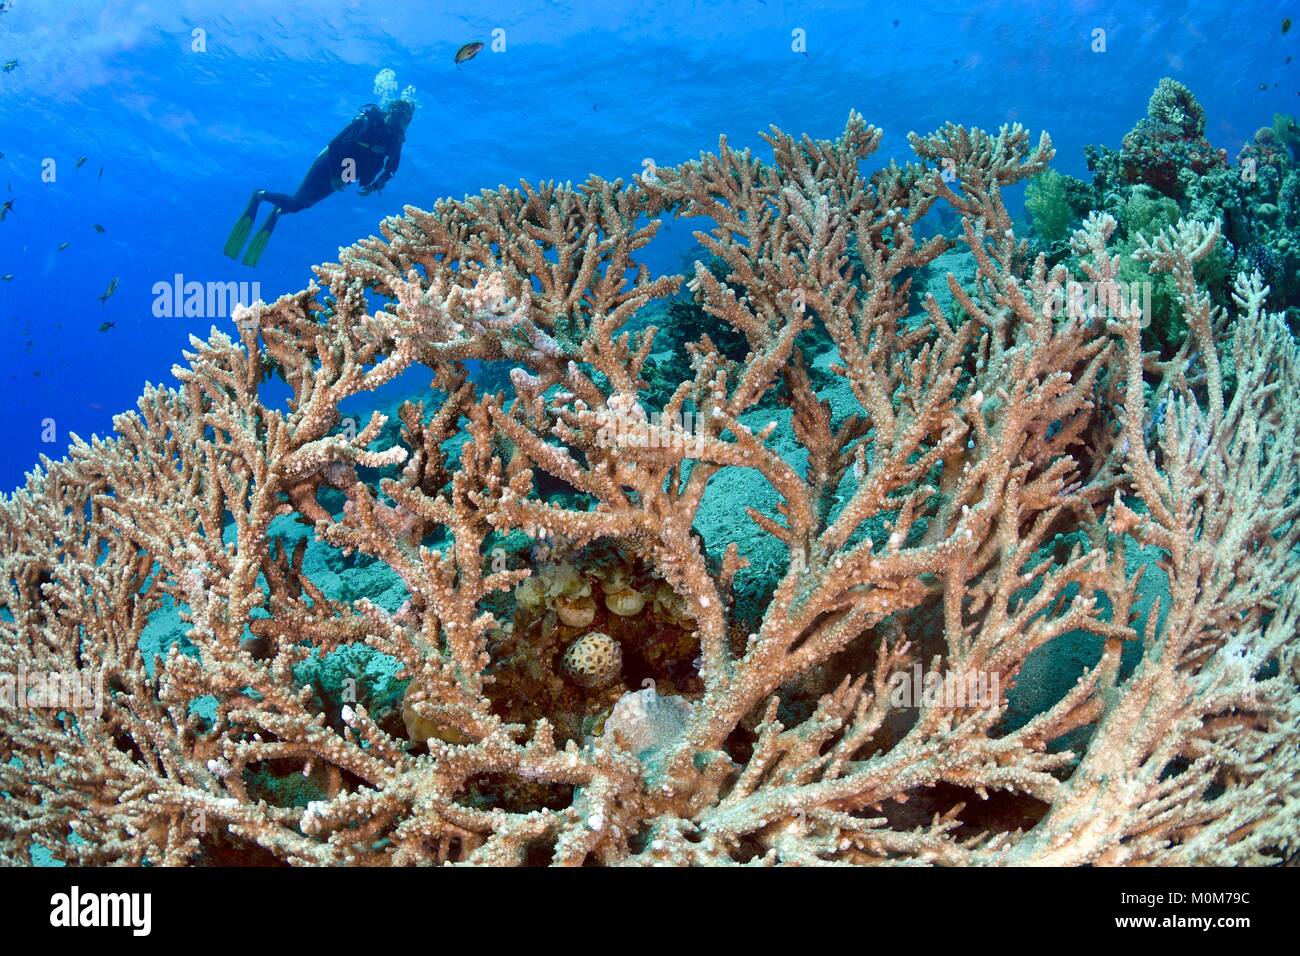 Egypt,Red Sea,Acropora sp. corals Stock Photo